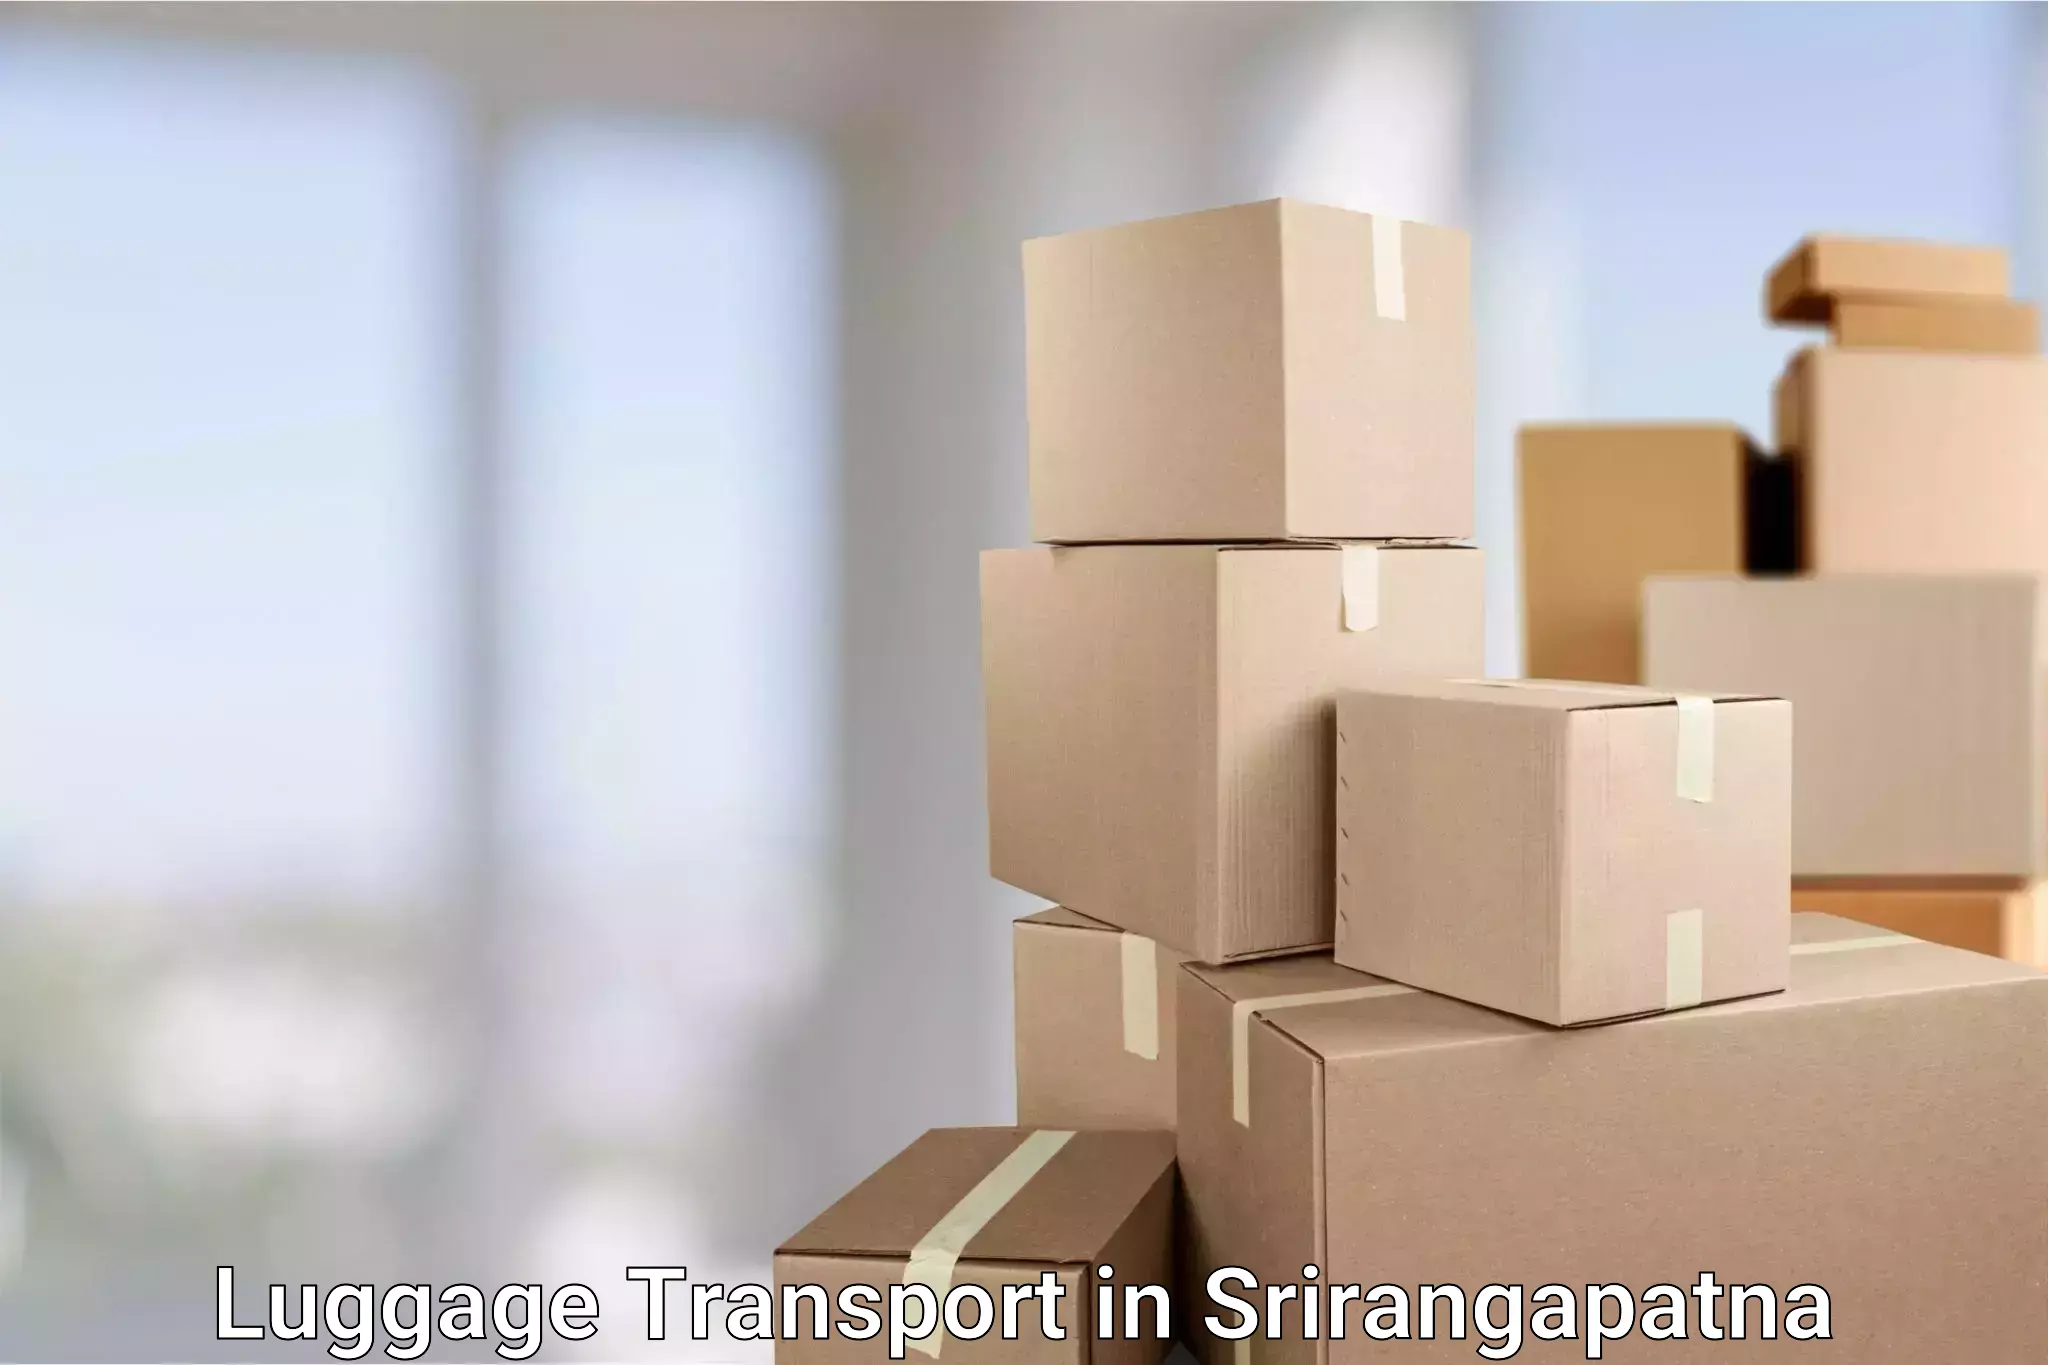 Luggage shipment tracking in Srirangapatna